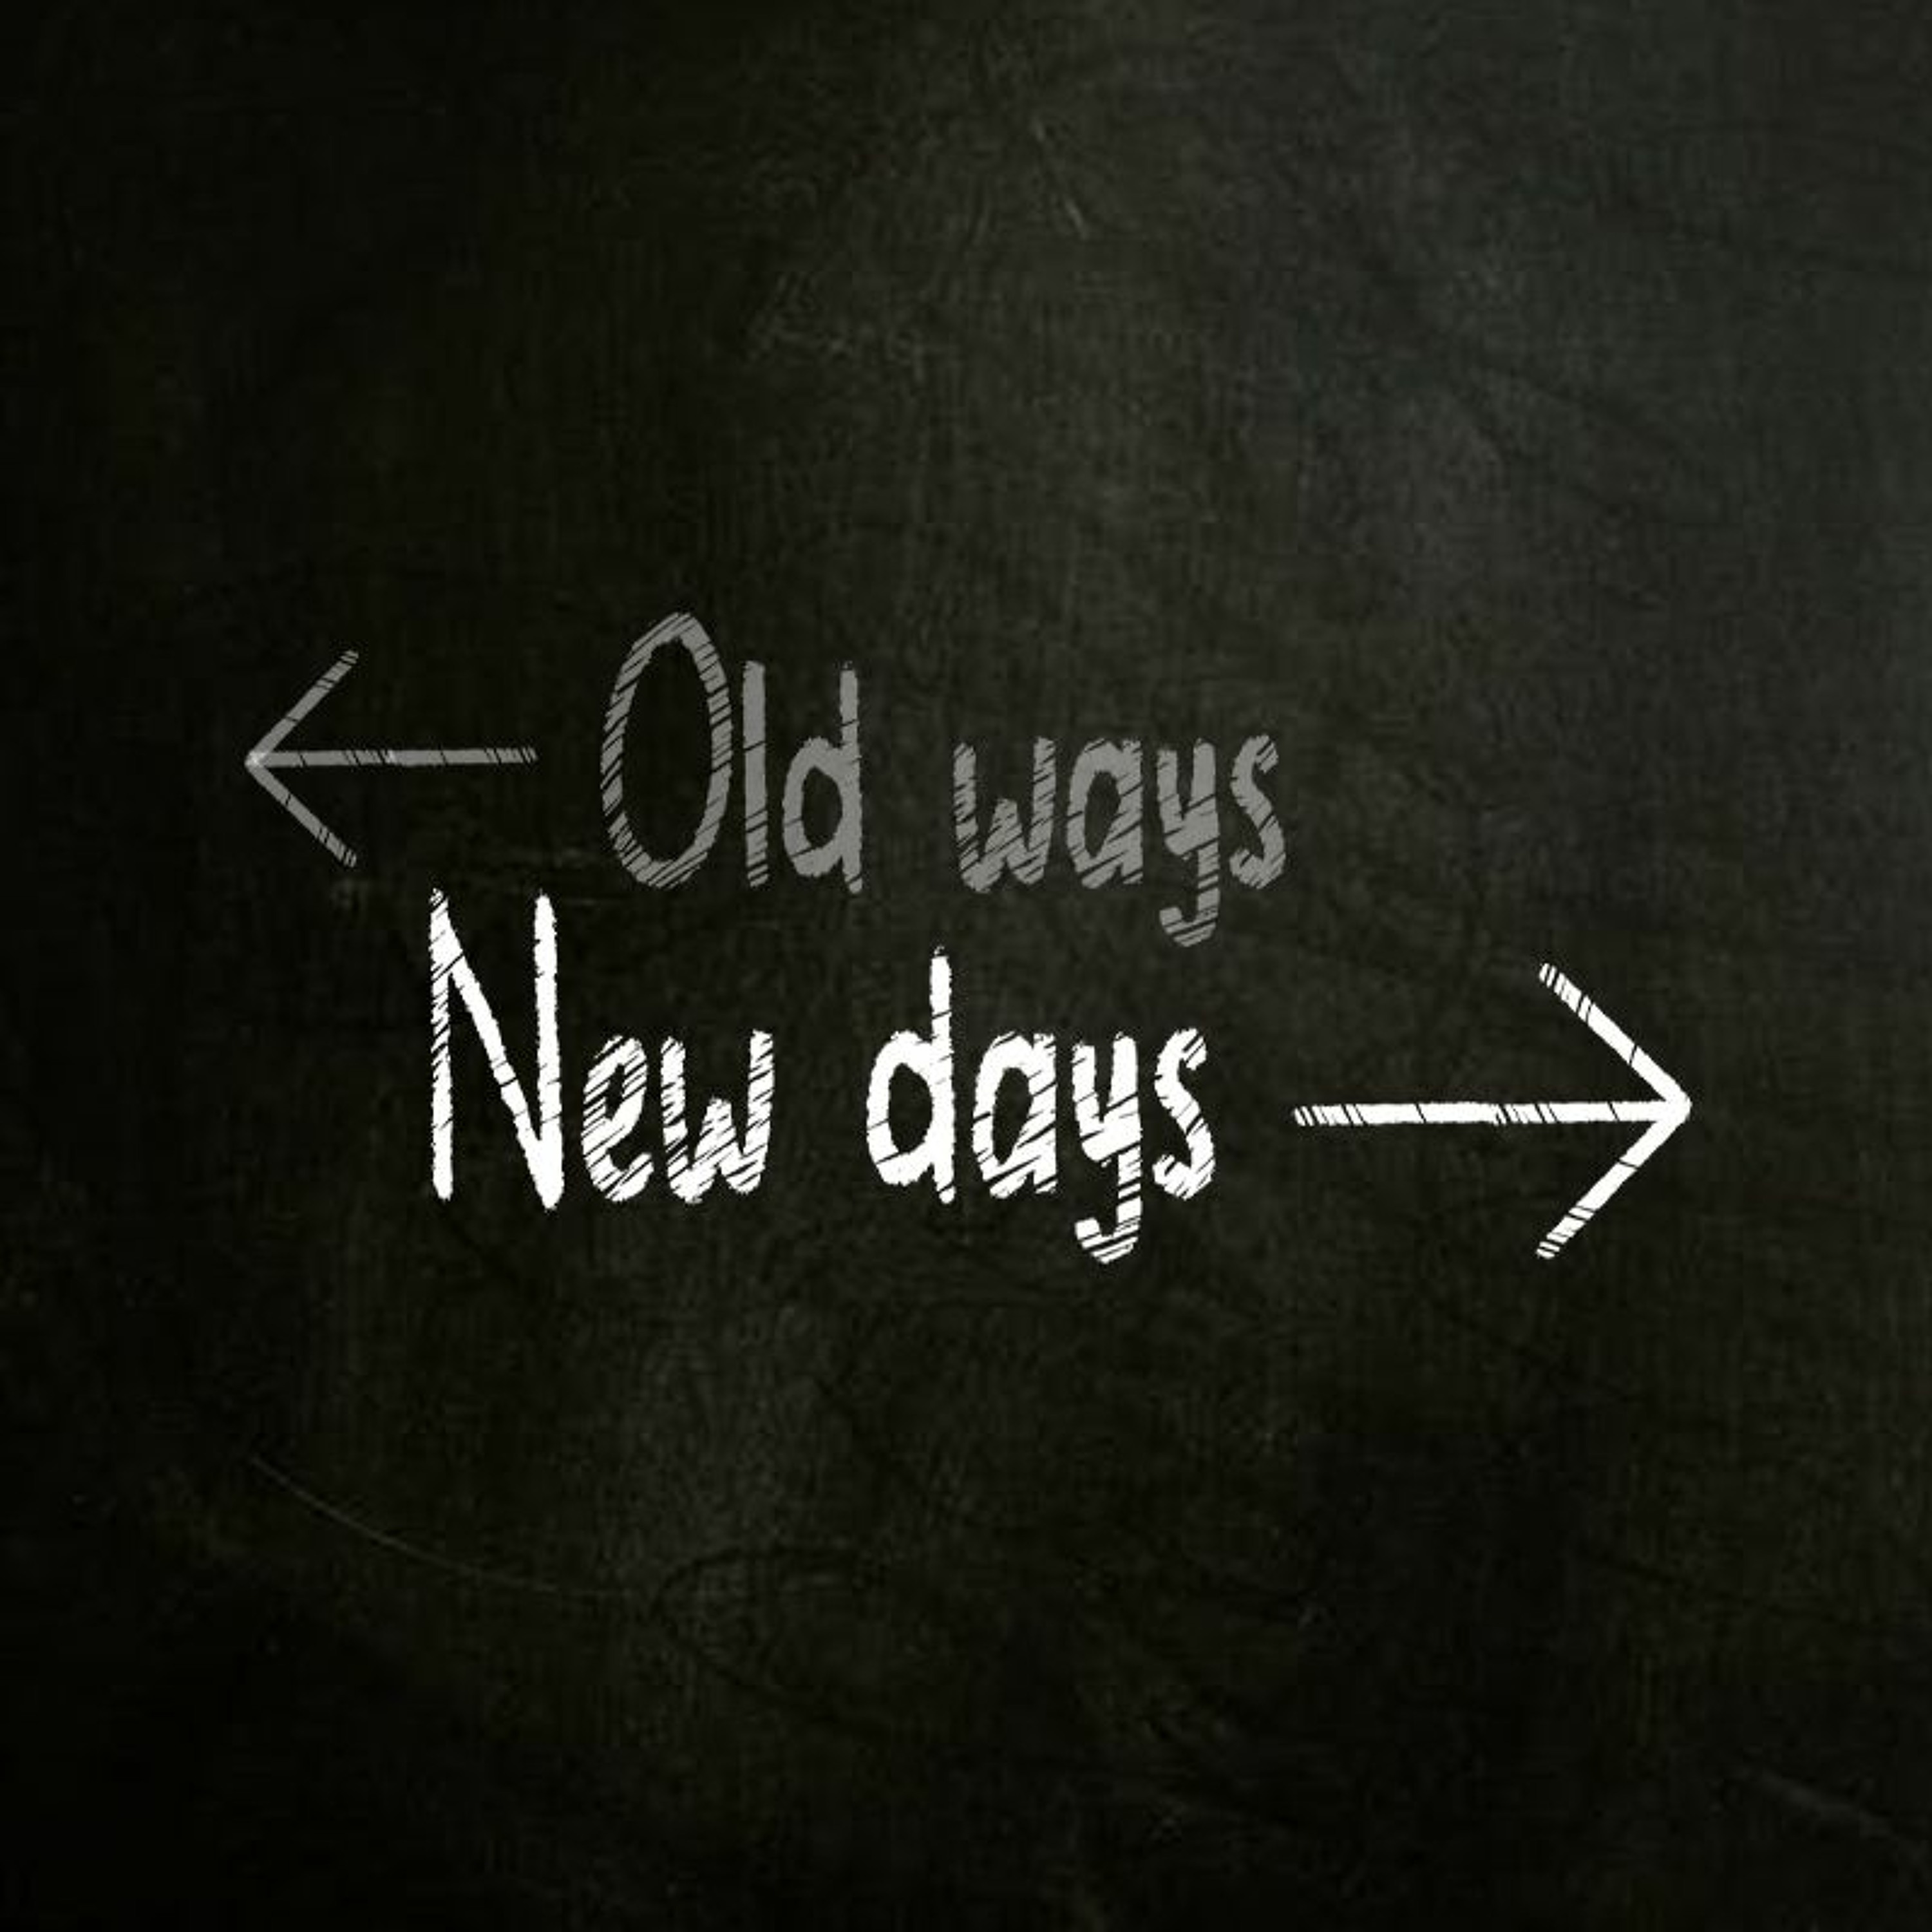 Old ways new days | Thanking God